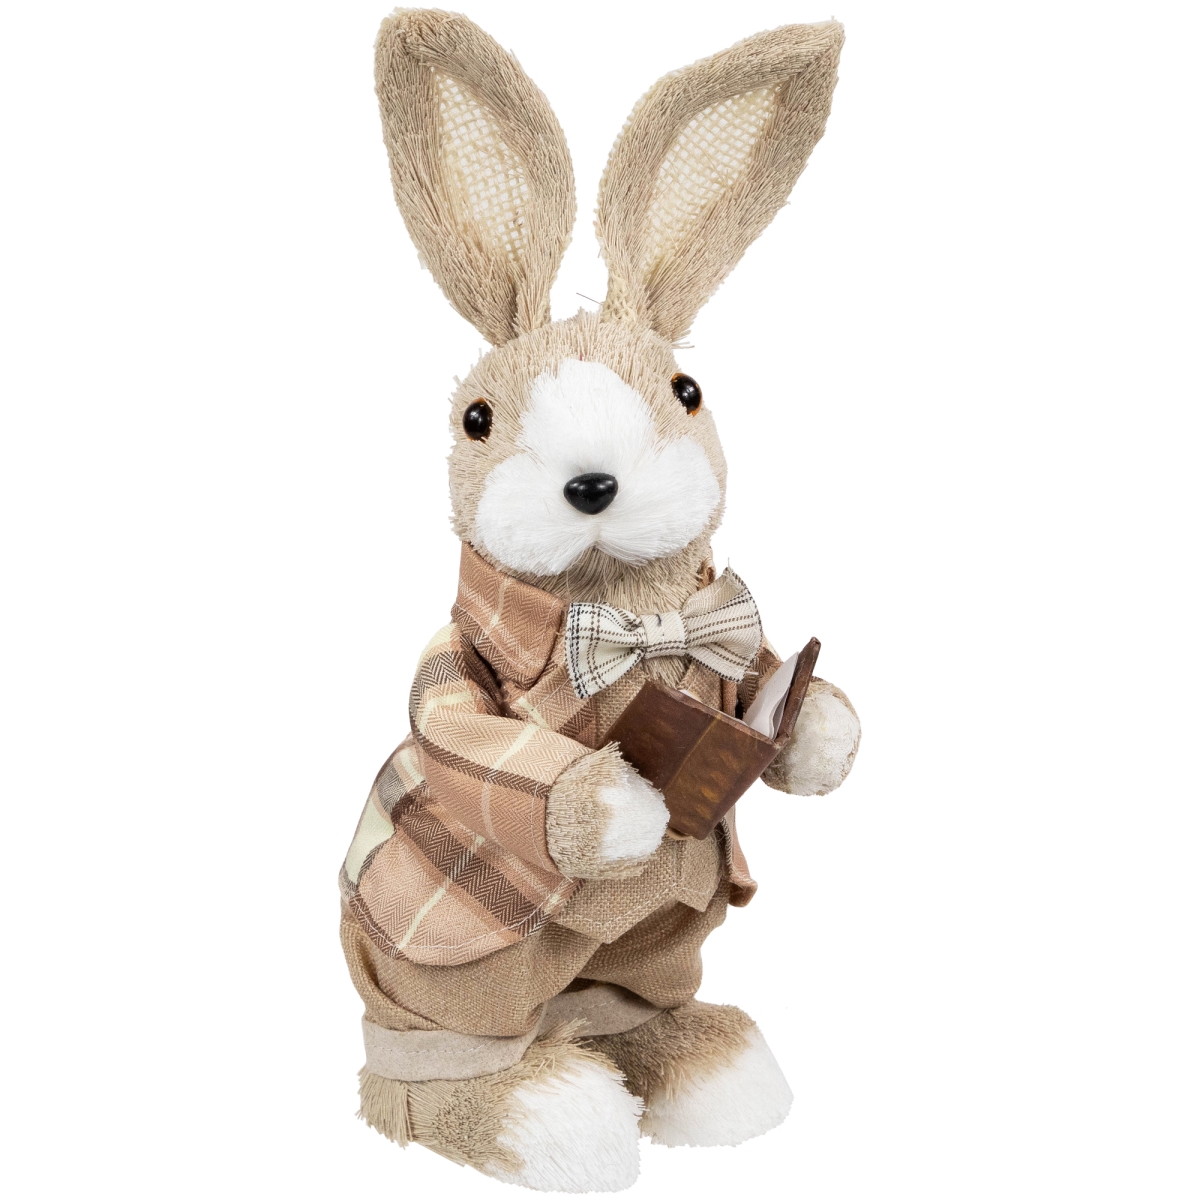 Northlight 35737333 12 x 4 x 4.25 in. Boy Easter Rabbit Figurine with Plaid Jacket&#44; Beige